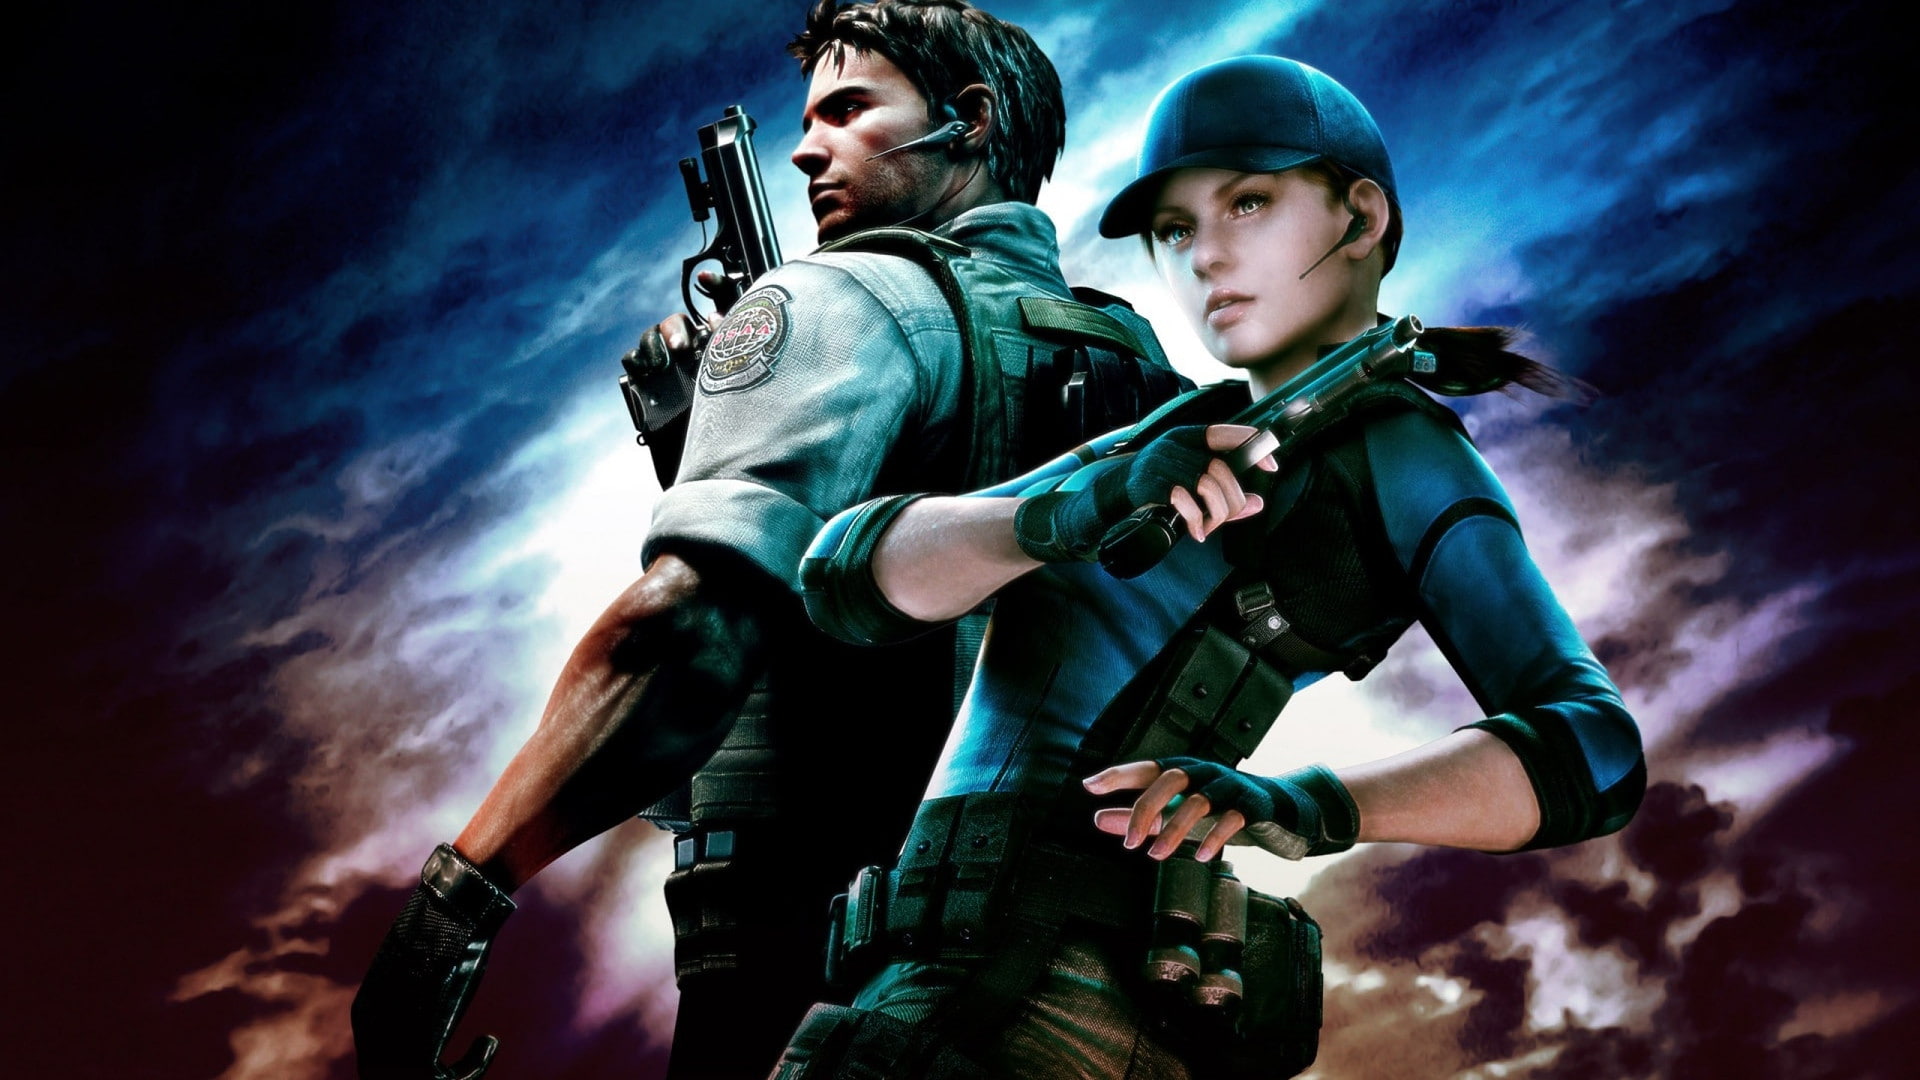 Wallpaper Game Resident Evil Sub Indo.